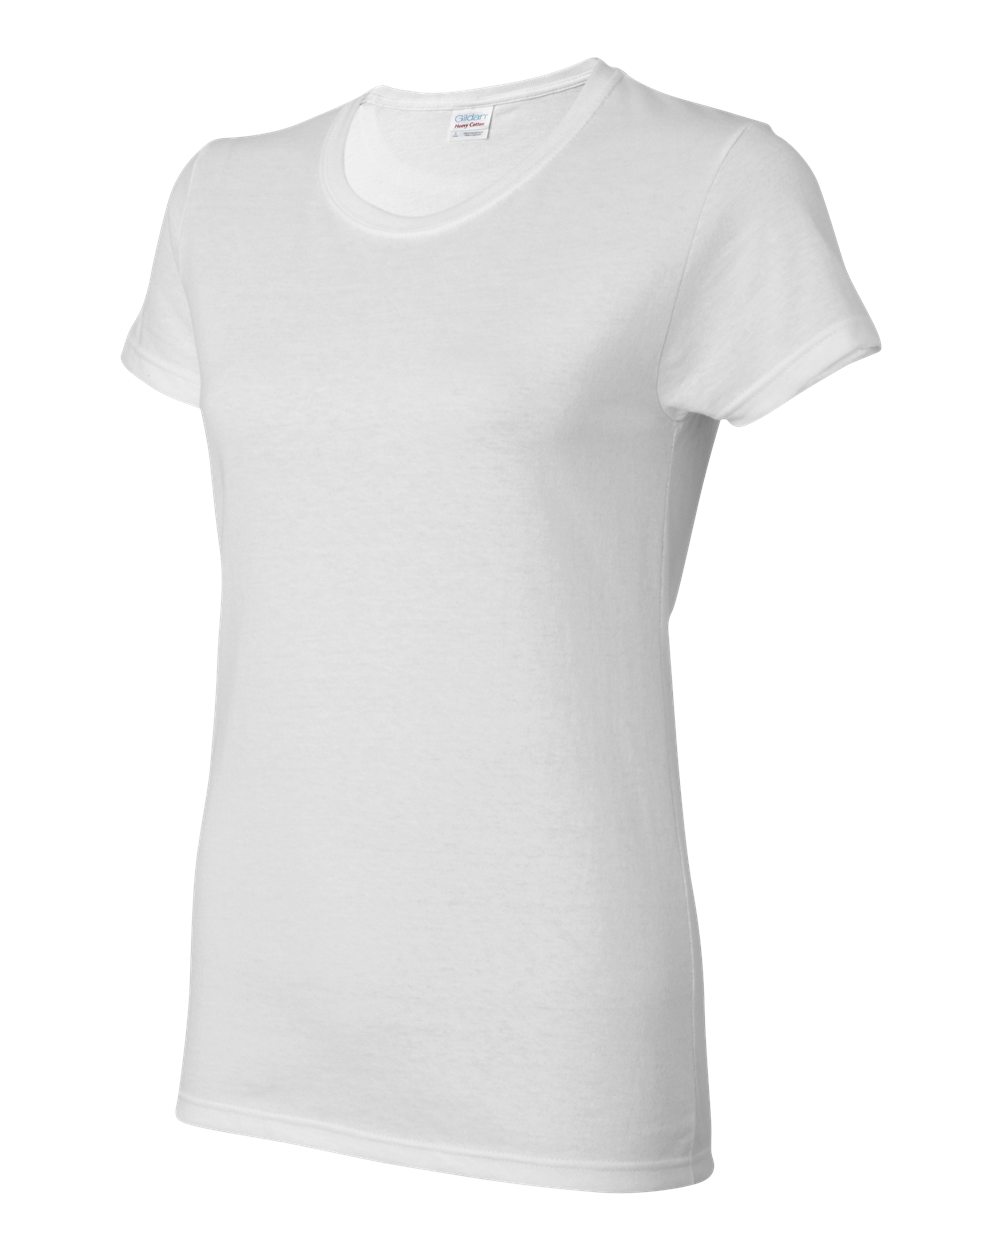 Ladies cotton check collar shirt @ 549/- Tag :M/L/XL/XXL Size : M  (36)/L(38)/XL(40)/XXL(42) Length: 28 Item code : 4X1192